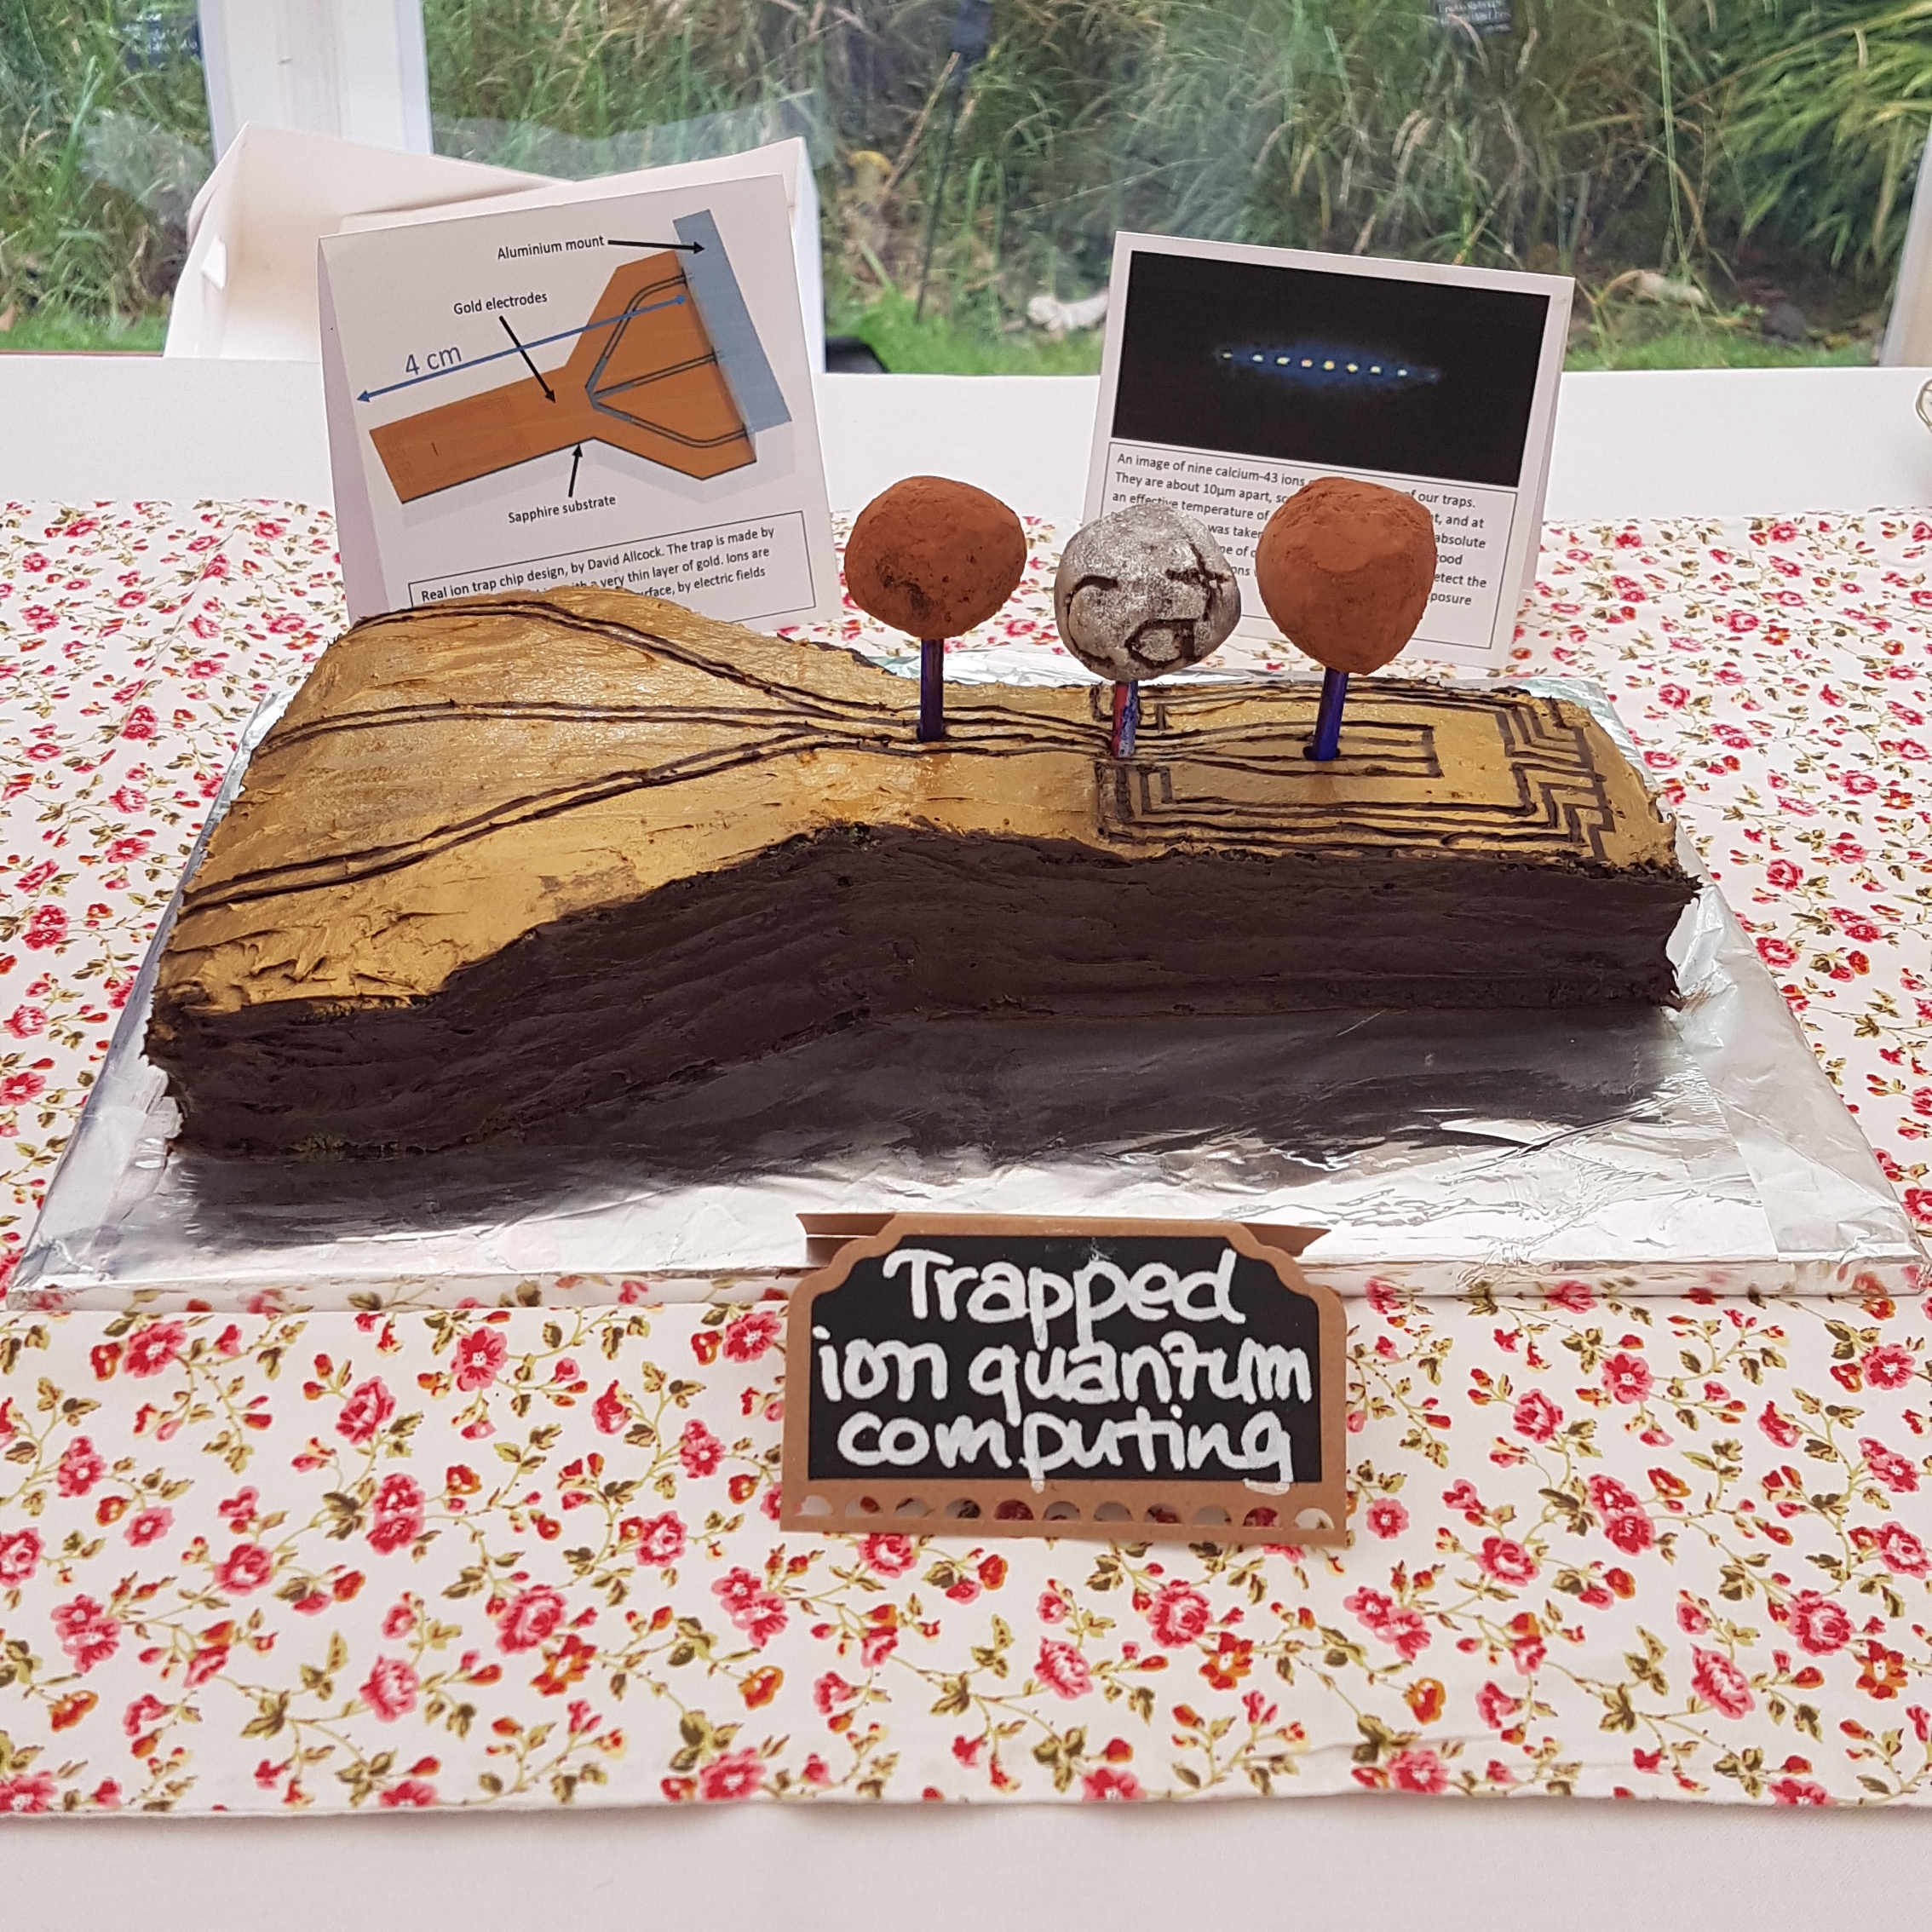 Amy Hughes' Trapped Ion Quantum Computing Cake!